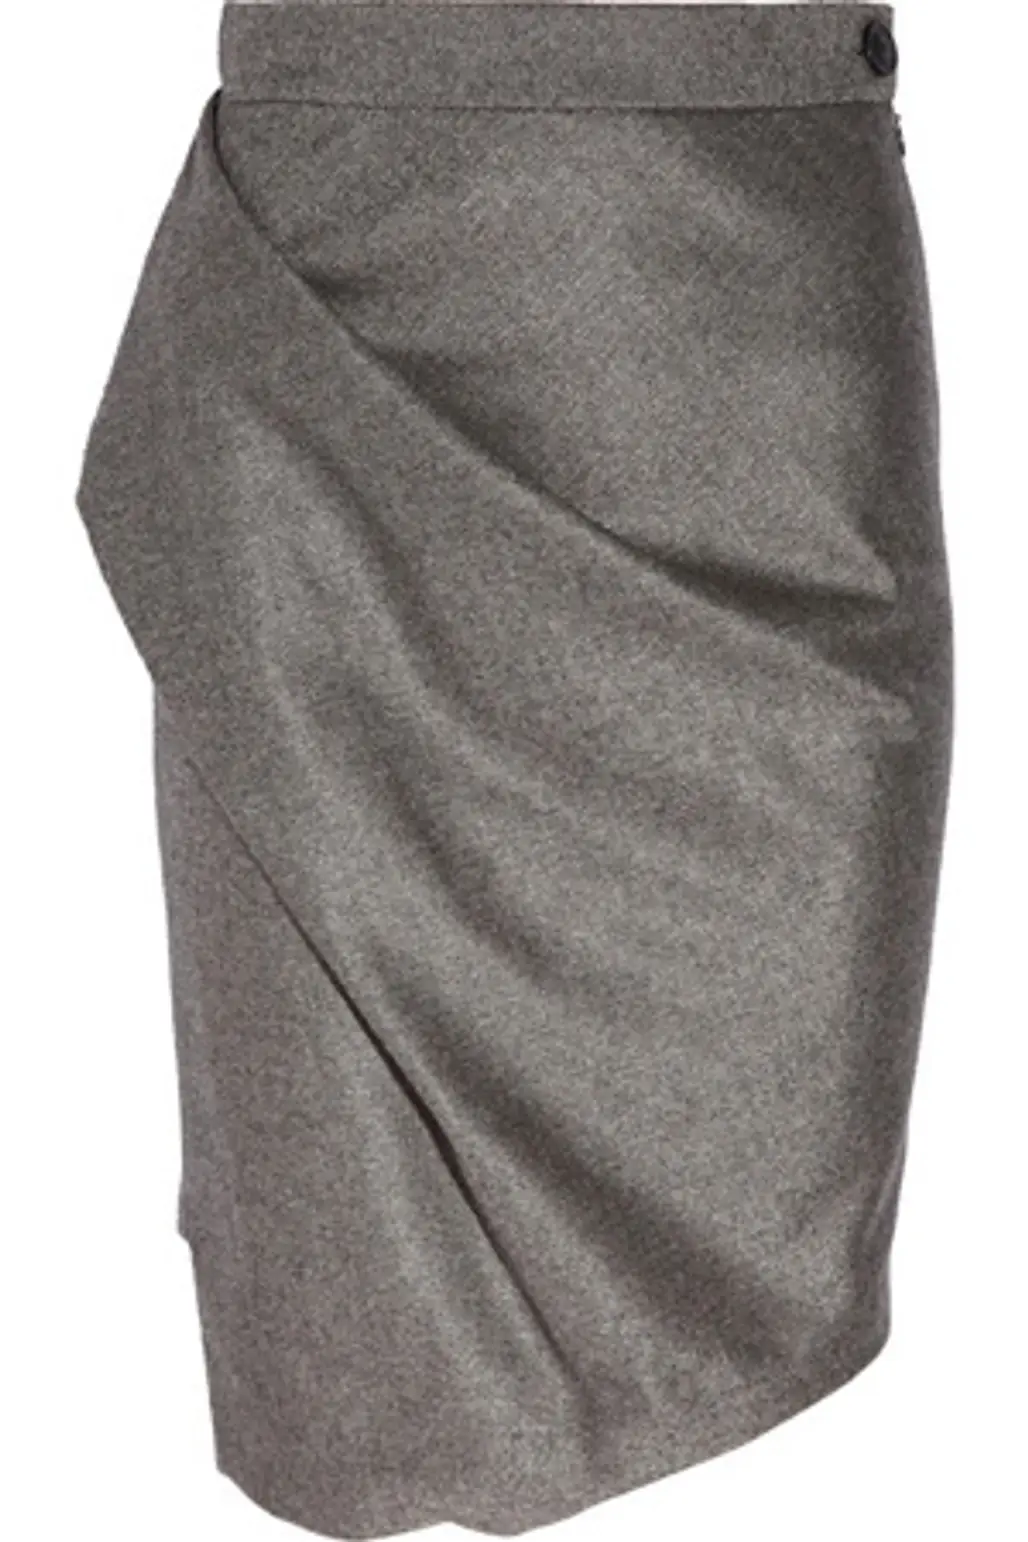 Vivienne Westwood Anglomania Philosophy Wool Blend Pencil Skirt